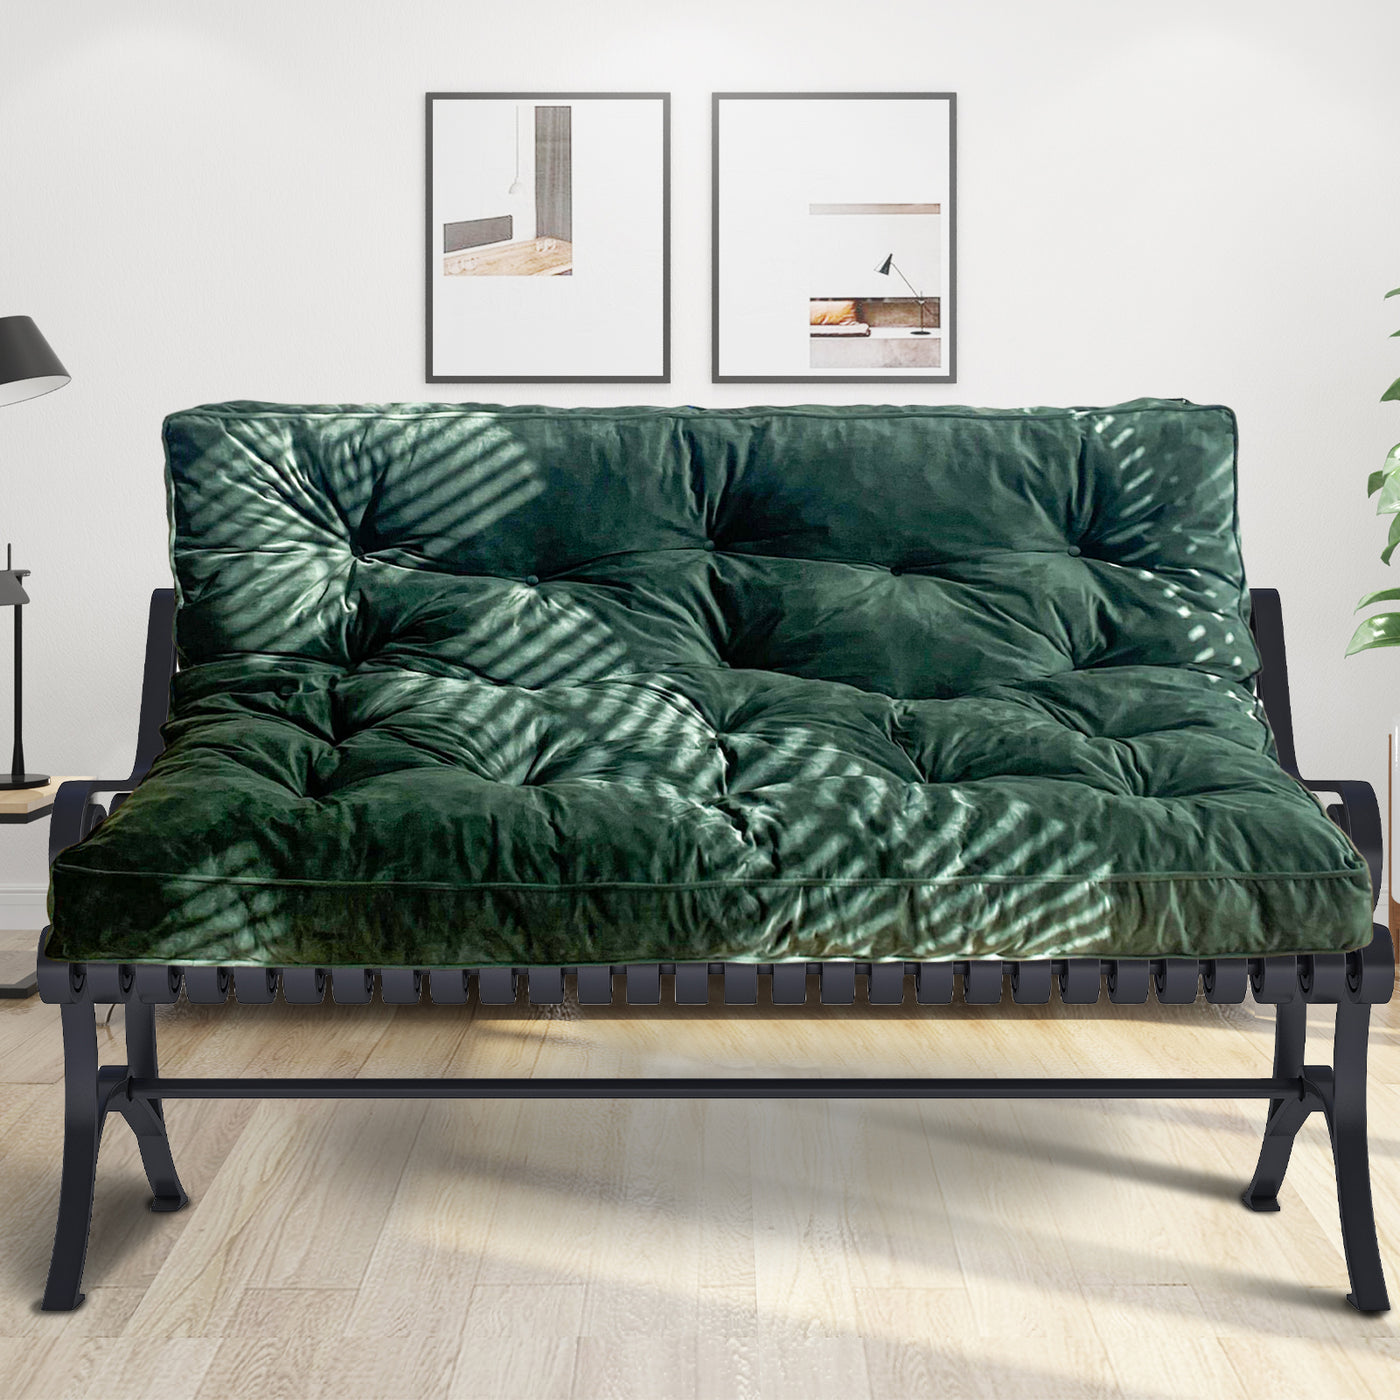 MAXYOYO 6" Futon Mattress Velvet Twin Size Futons Sofa Couch Bed (Mattress Only), Green